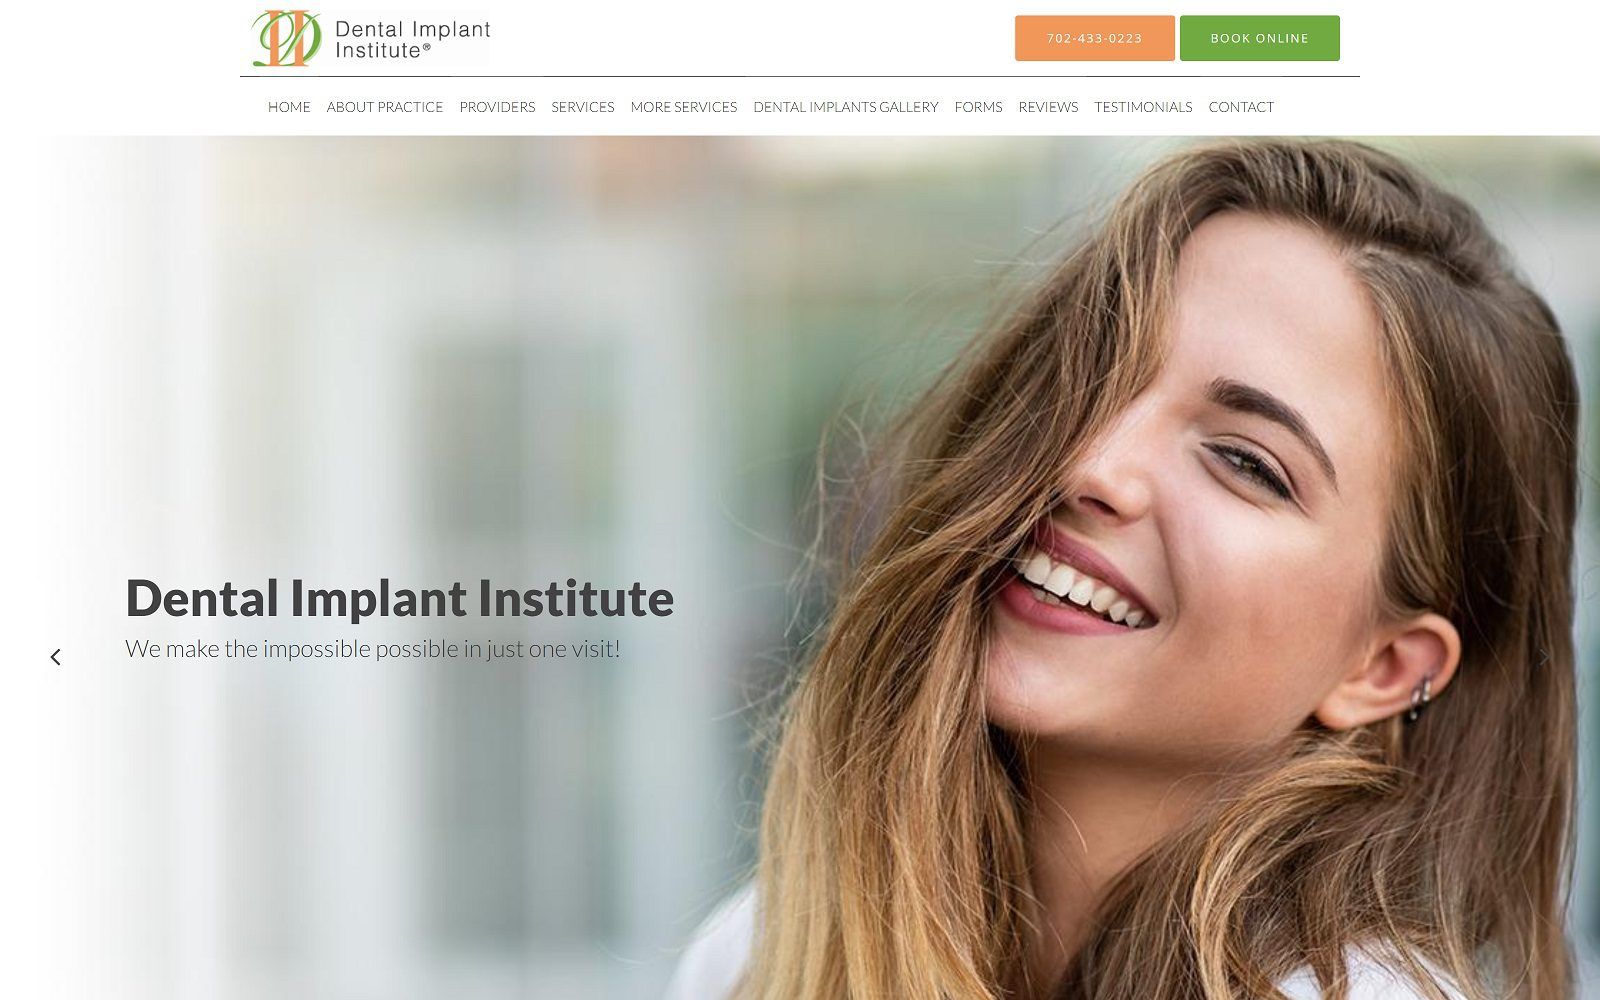 The screenshot of dental implant institute website